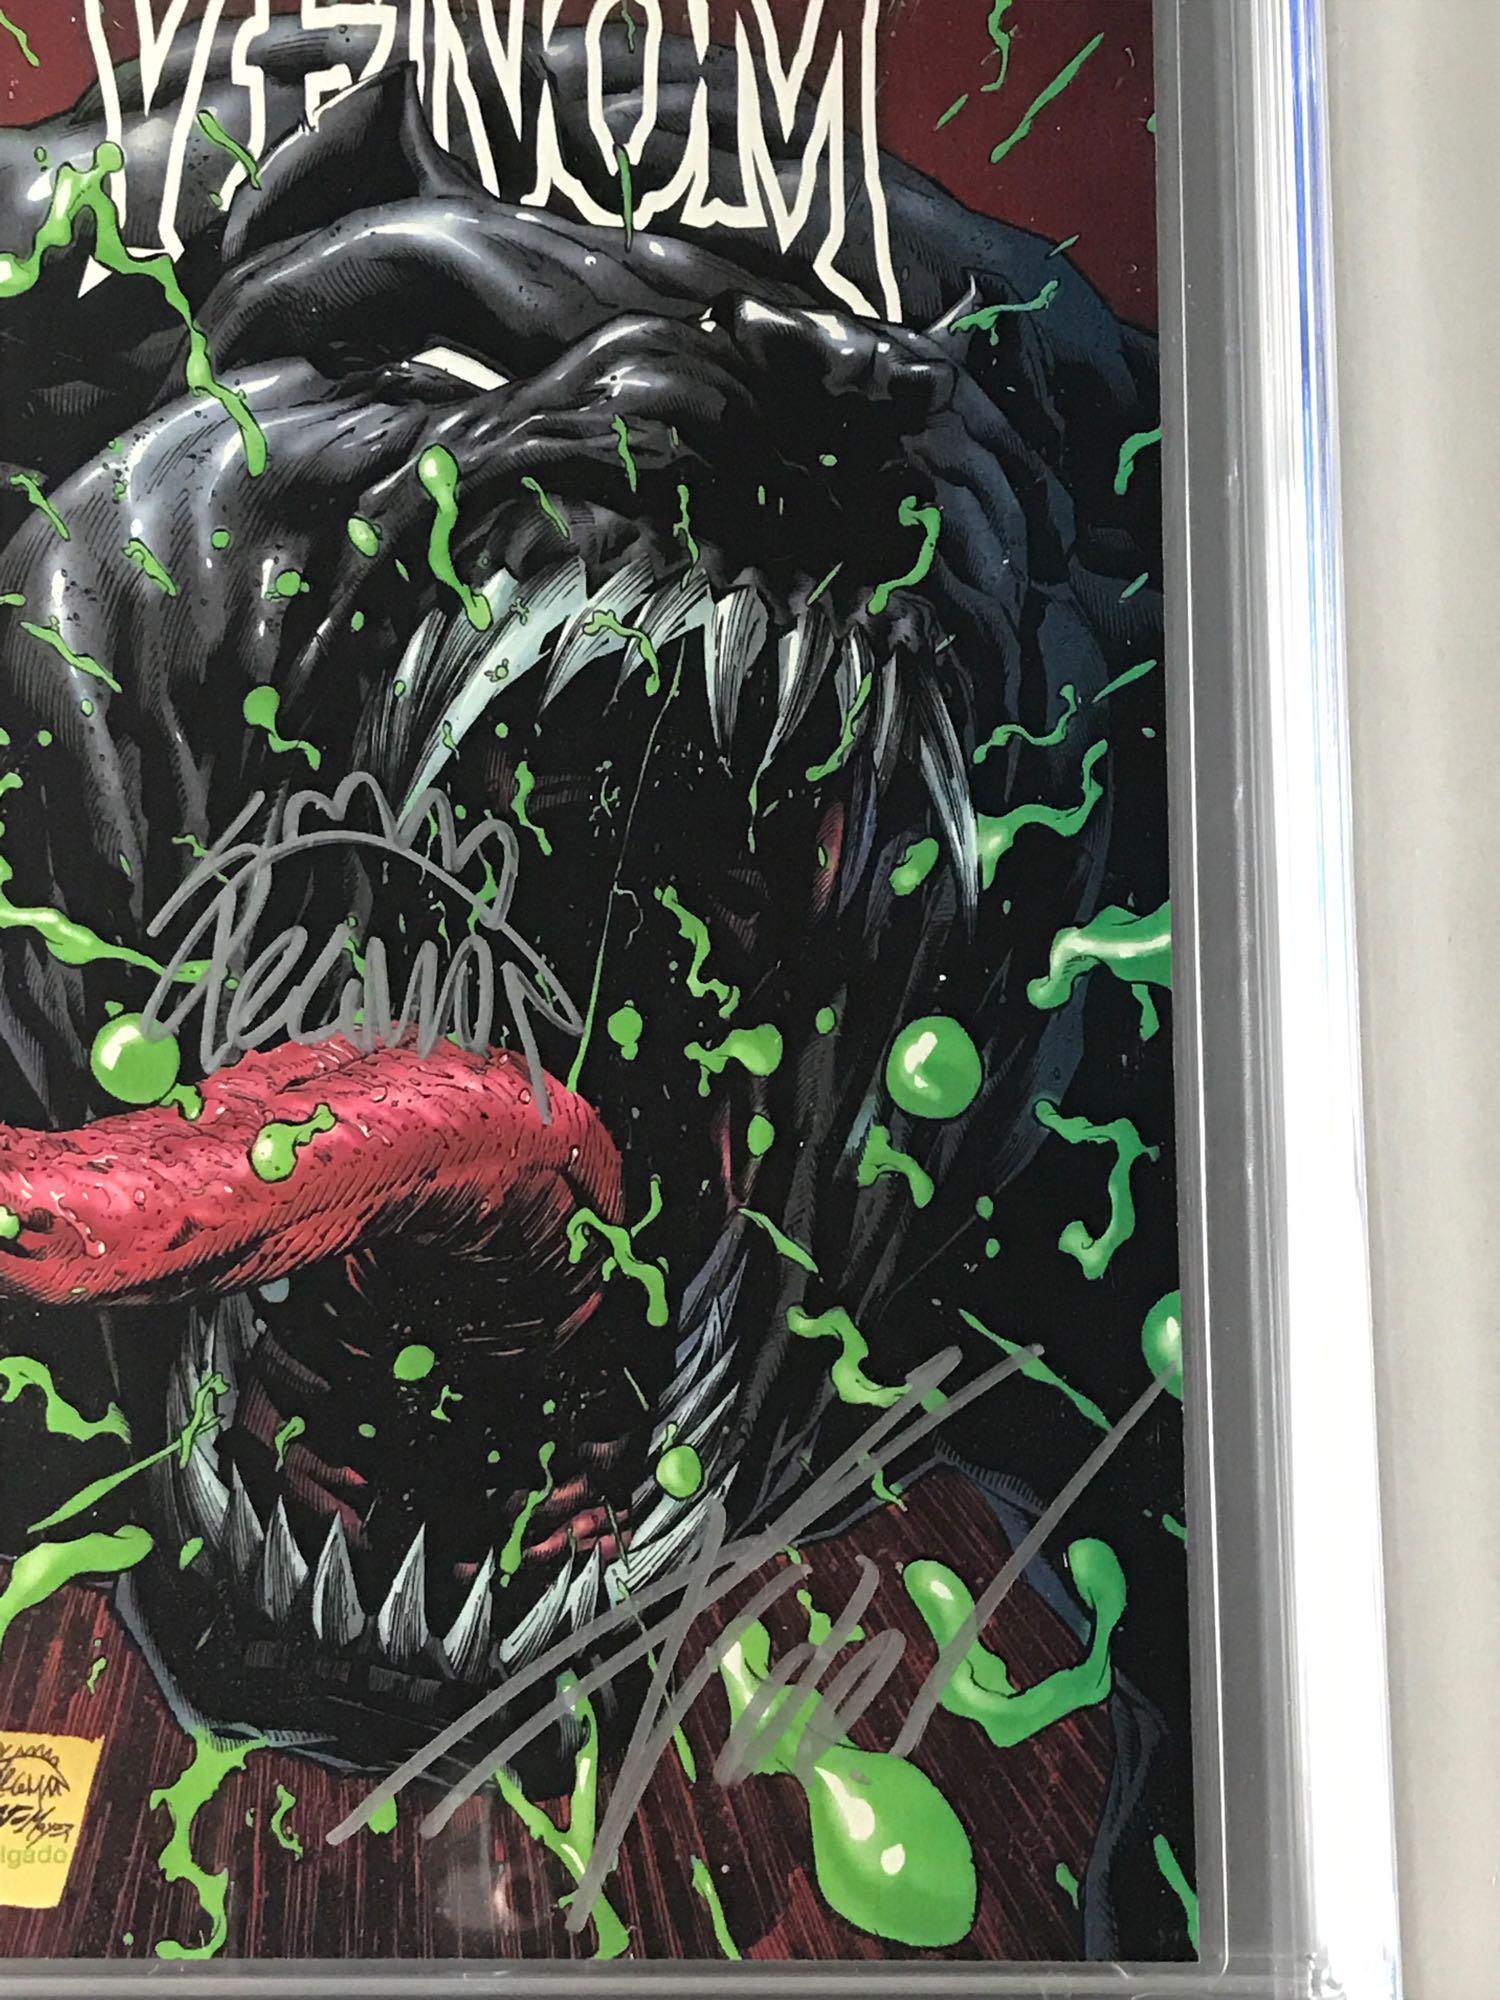 Signed CGC Graded Marvel Comics Venom No. 9 comic book